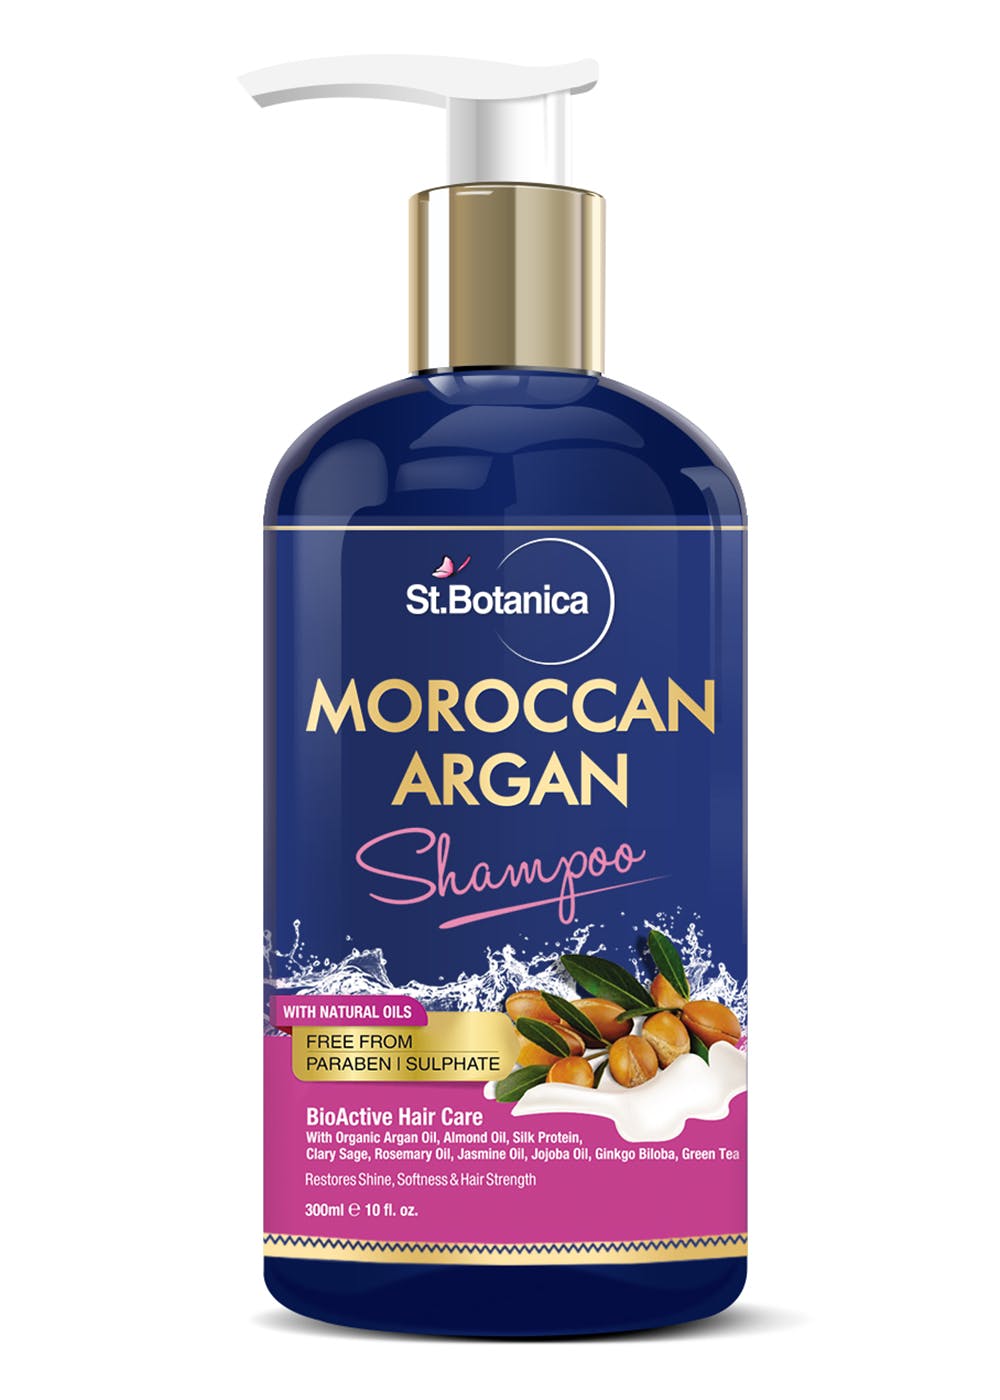 St.Botanica Moroccan Argan Hair Shampoo, 300ml